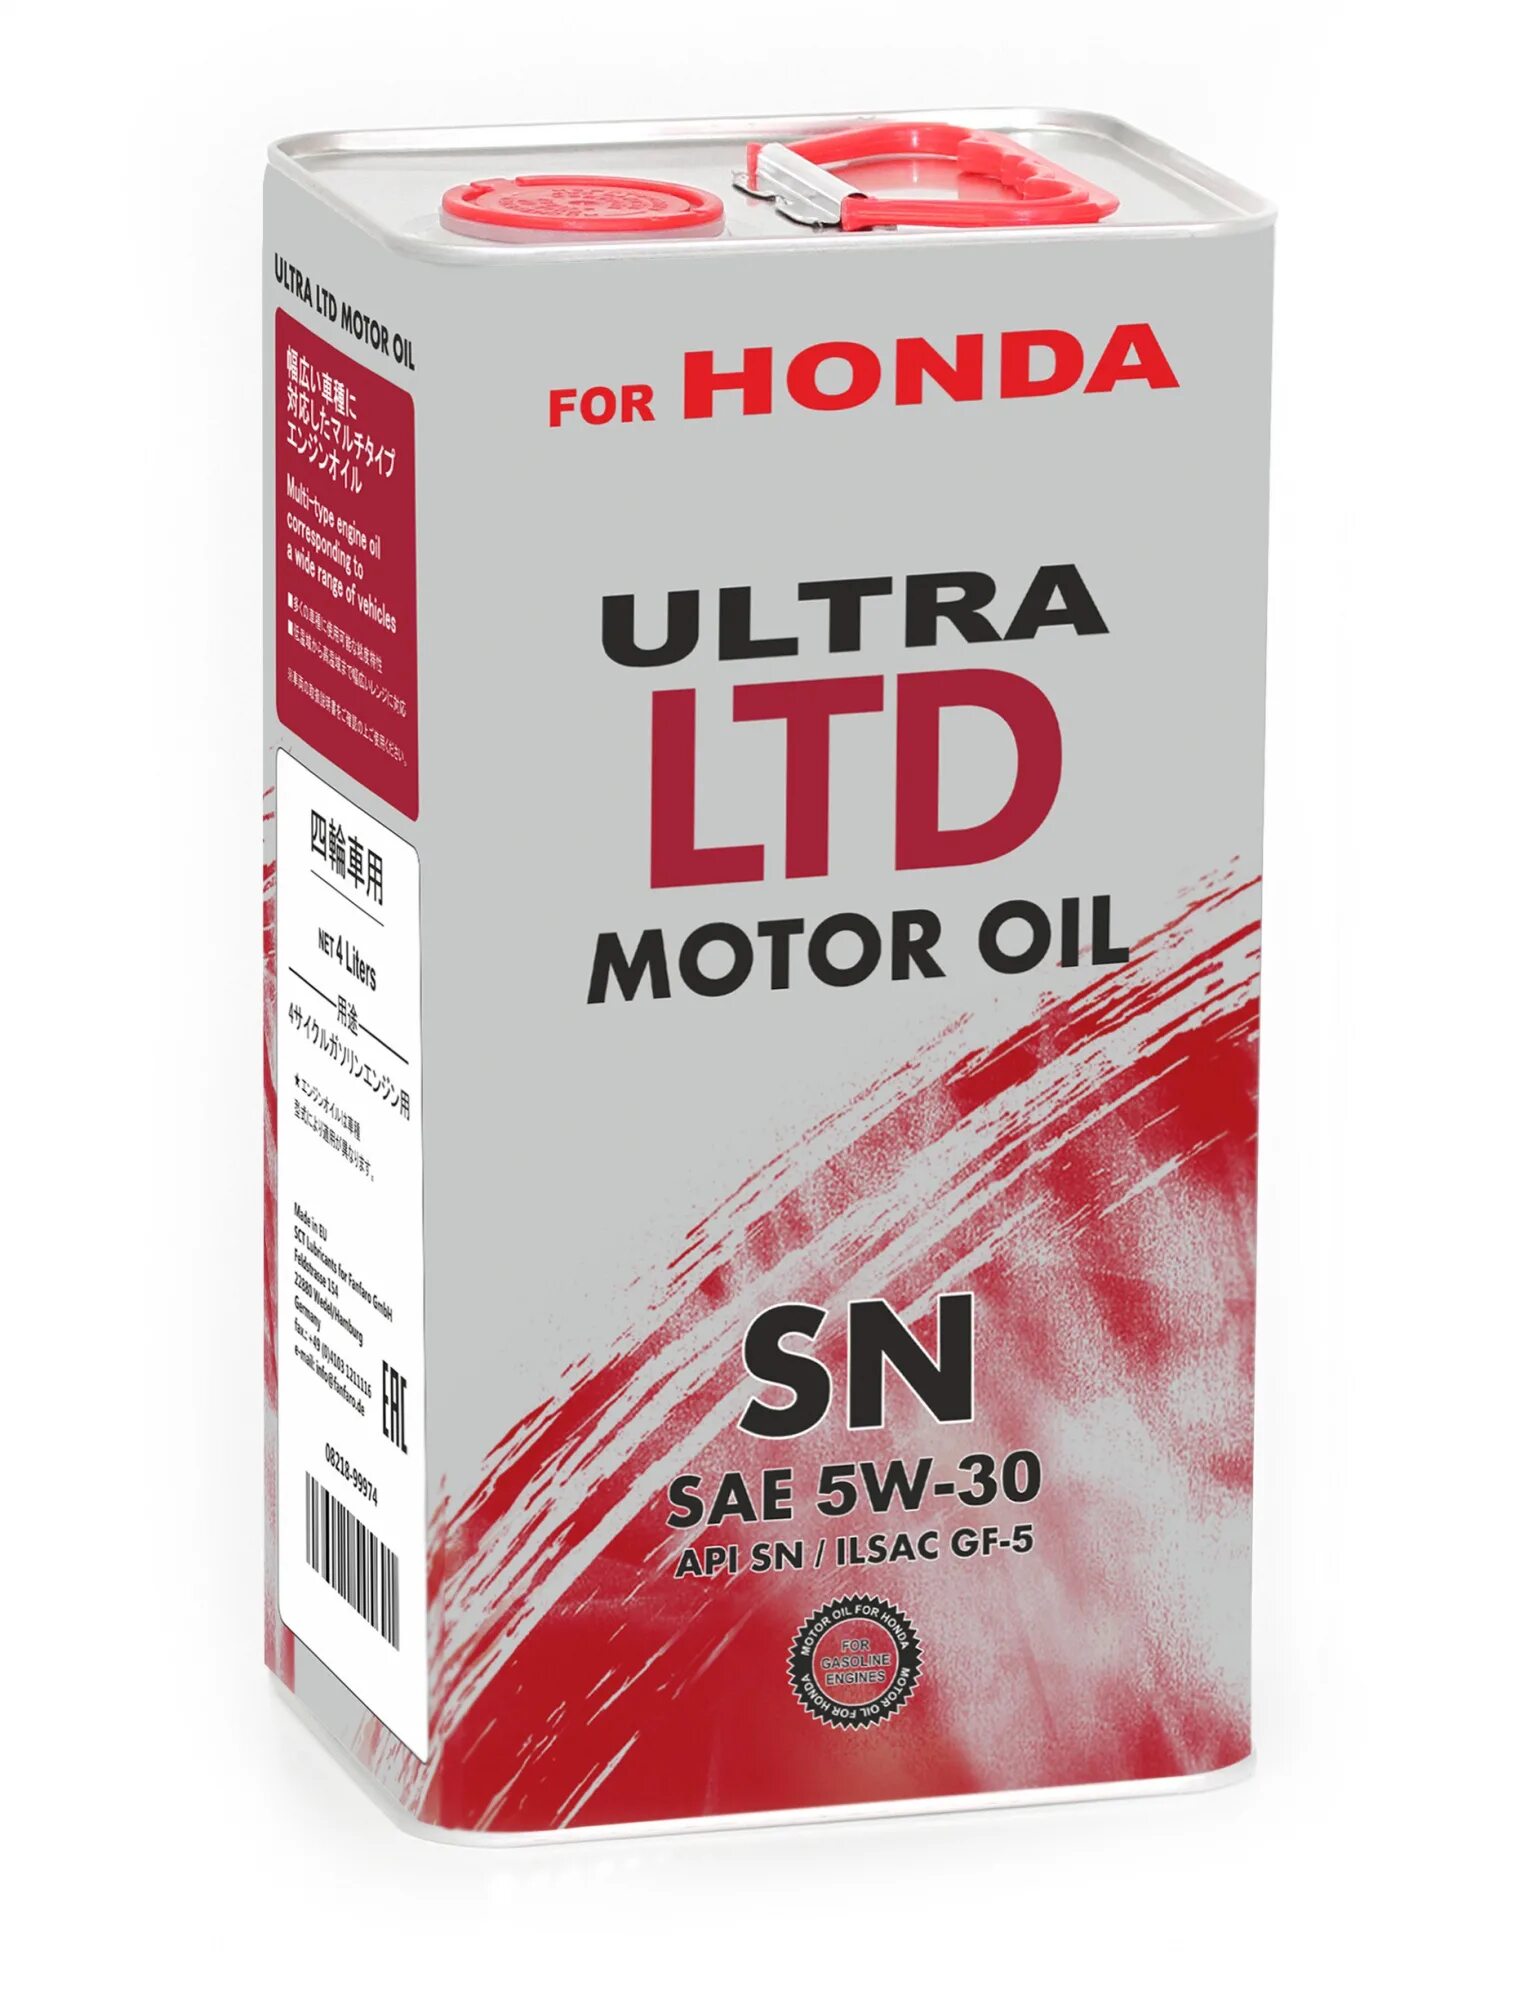 Honda Ultra Ltd 5w30 SN 4л. Honda Ultra Ltd SAE 5w-30. Honda Ultra Ltd SN/gf 5w-30 1л. Fanfaro Honda 5w30.